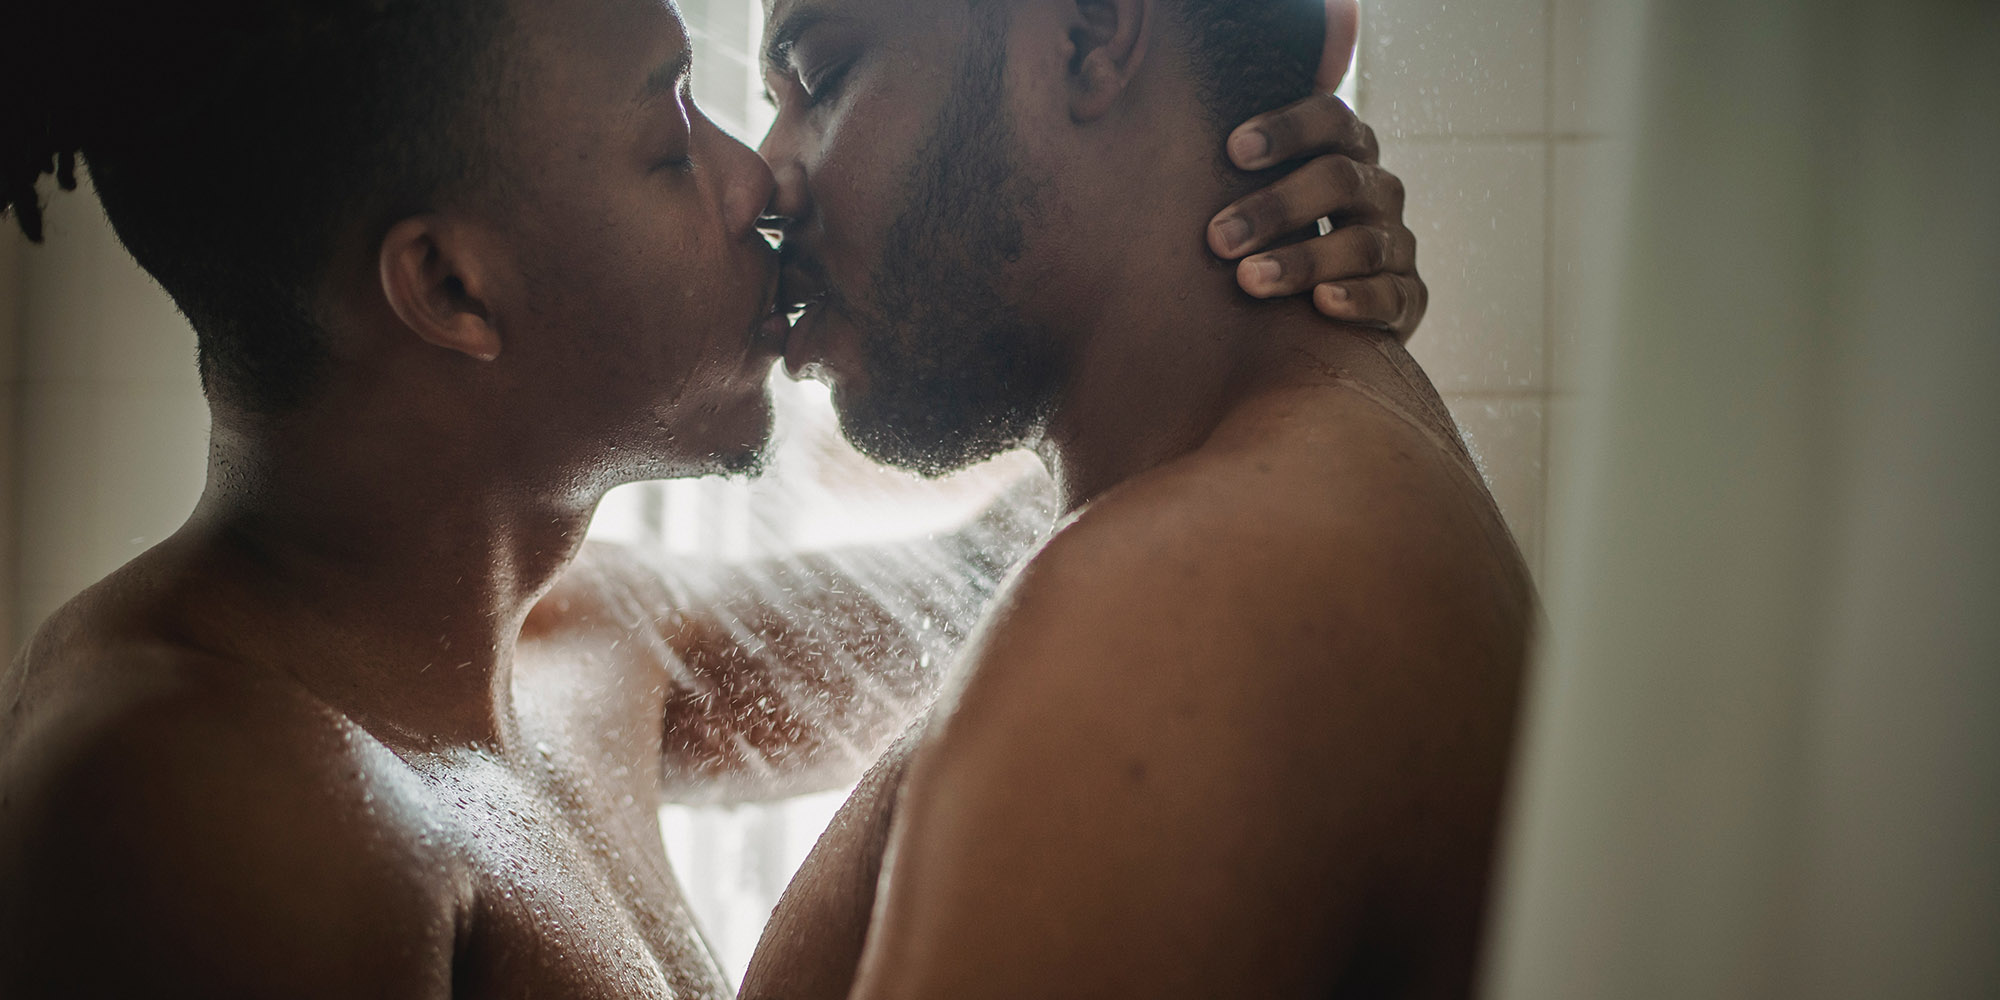 Two Black men kissing in the shower